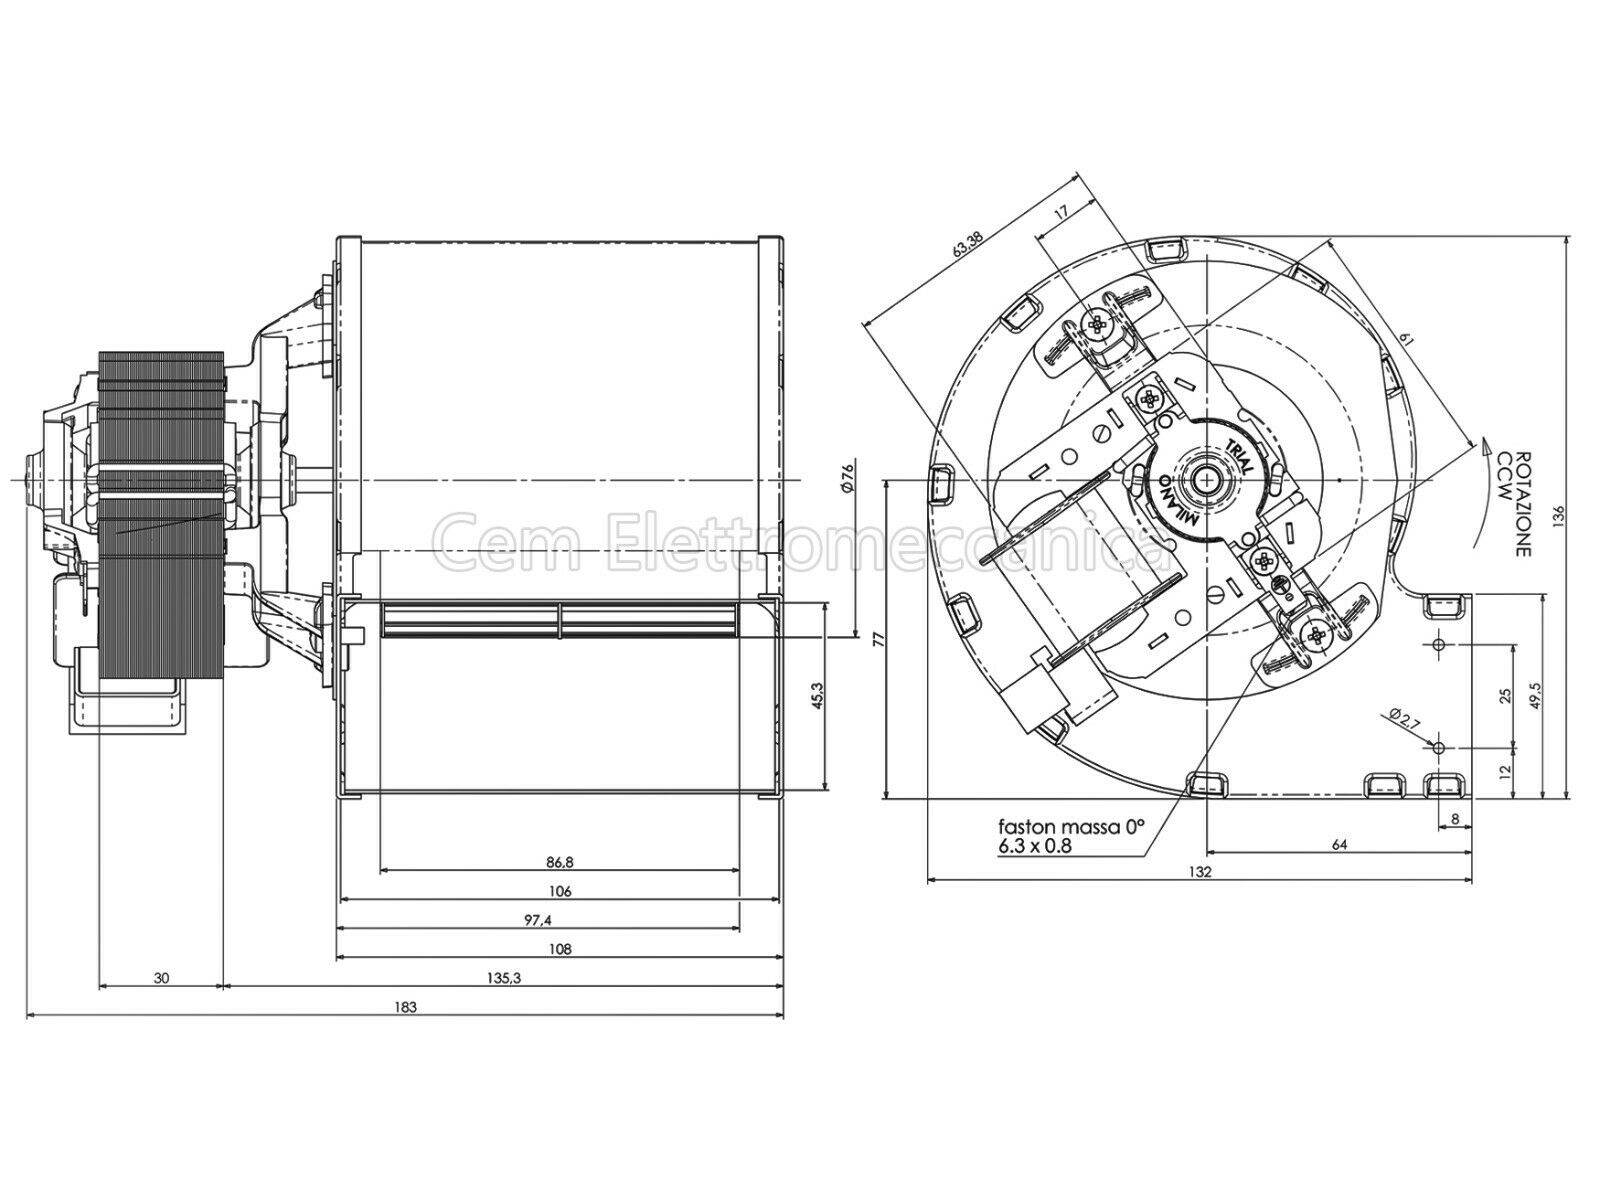 Ventilatore centrifugo monofase TRIAL 66 watt motore SX